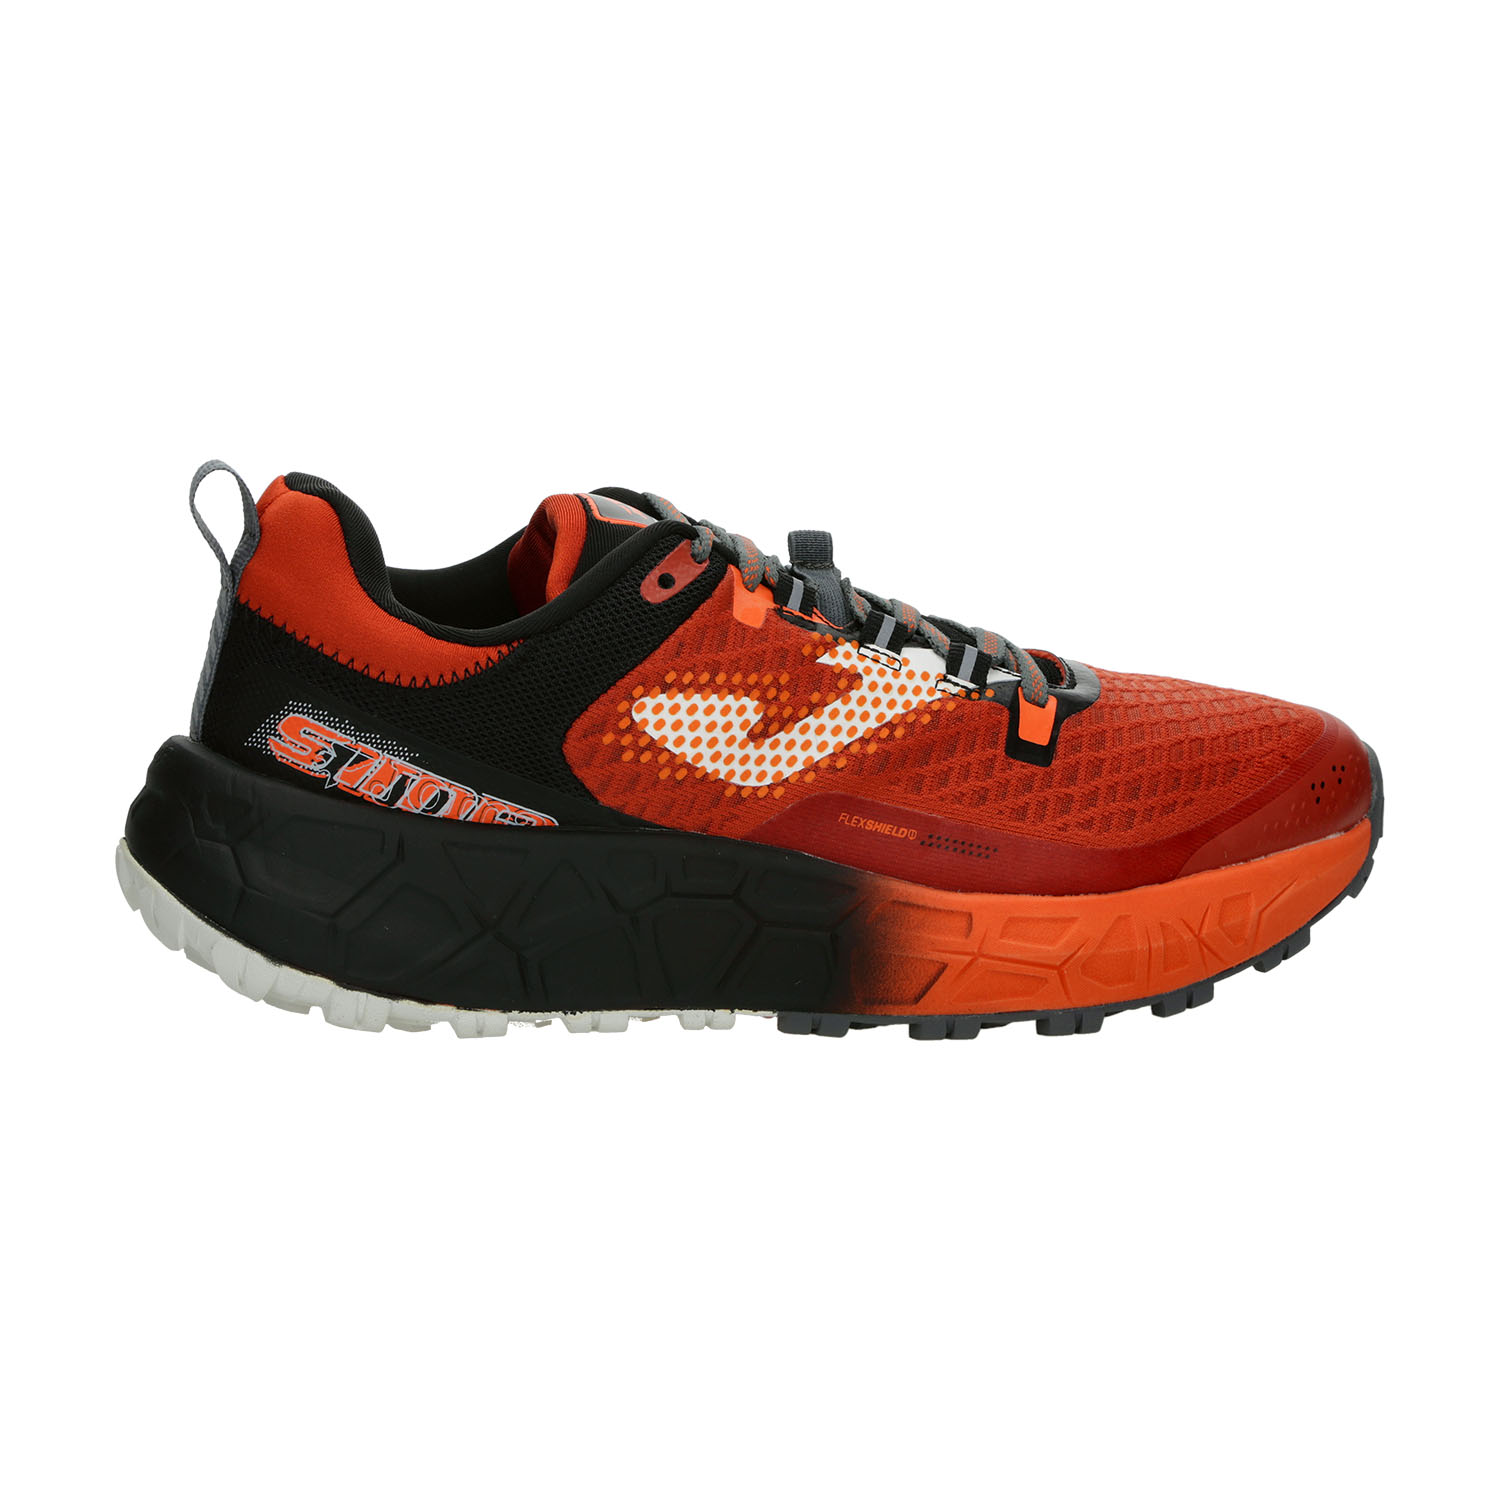 Joma Sima Men's Trail Running Shoes - Orange